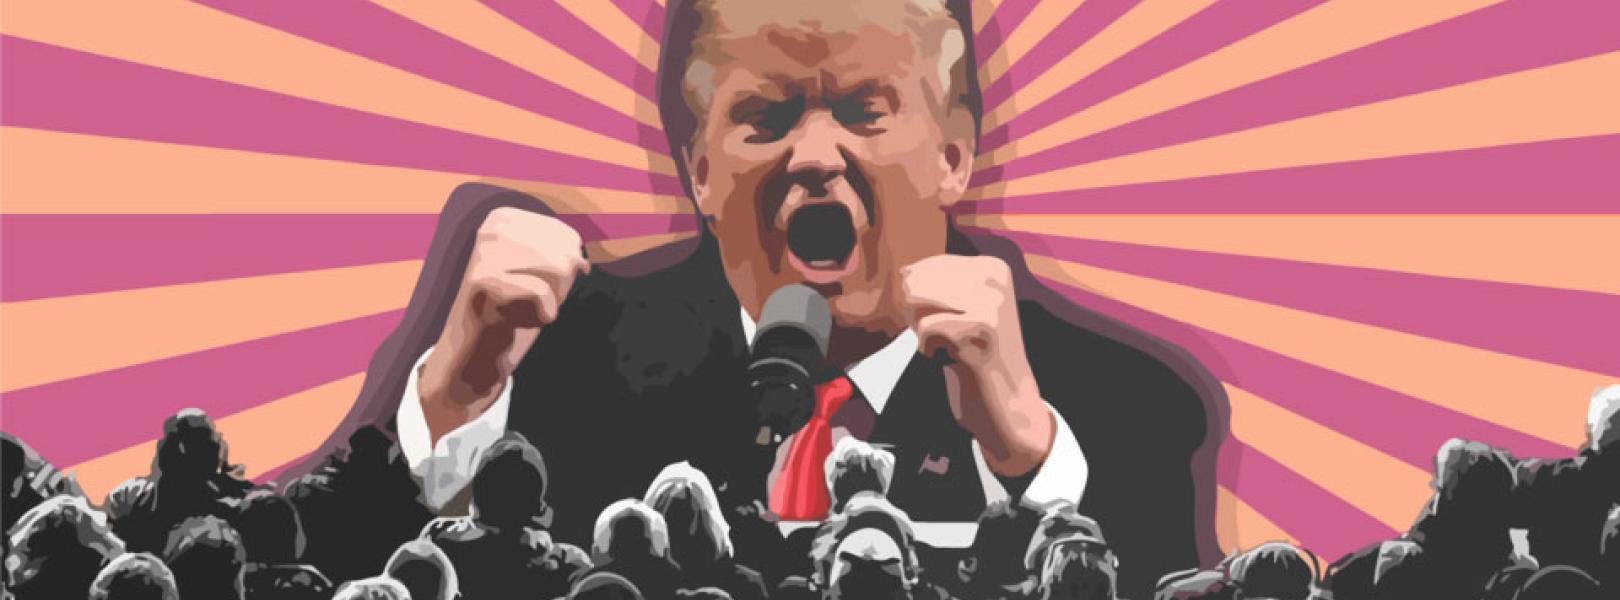 Donald Trump “Verkiezingsramp”: MAGA is een valstrik